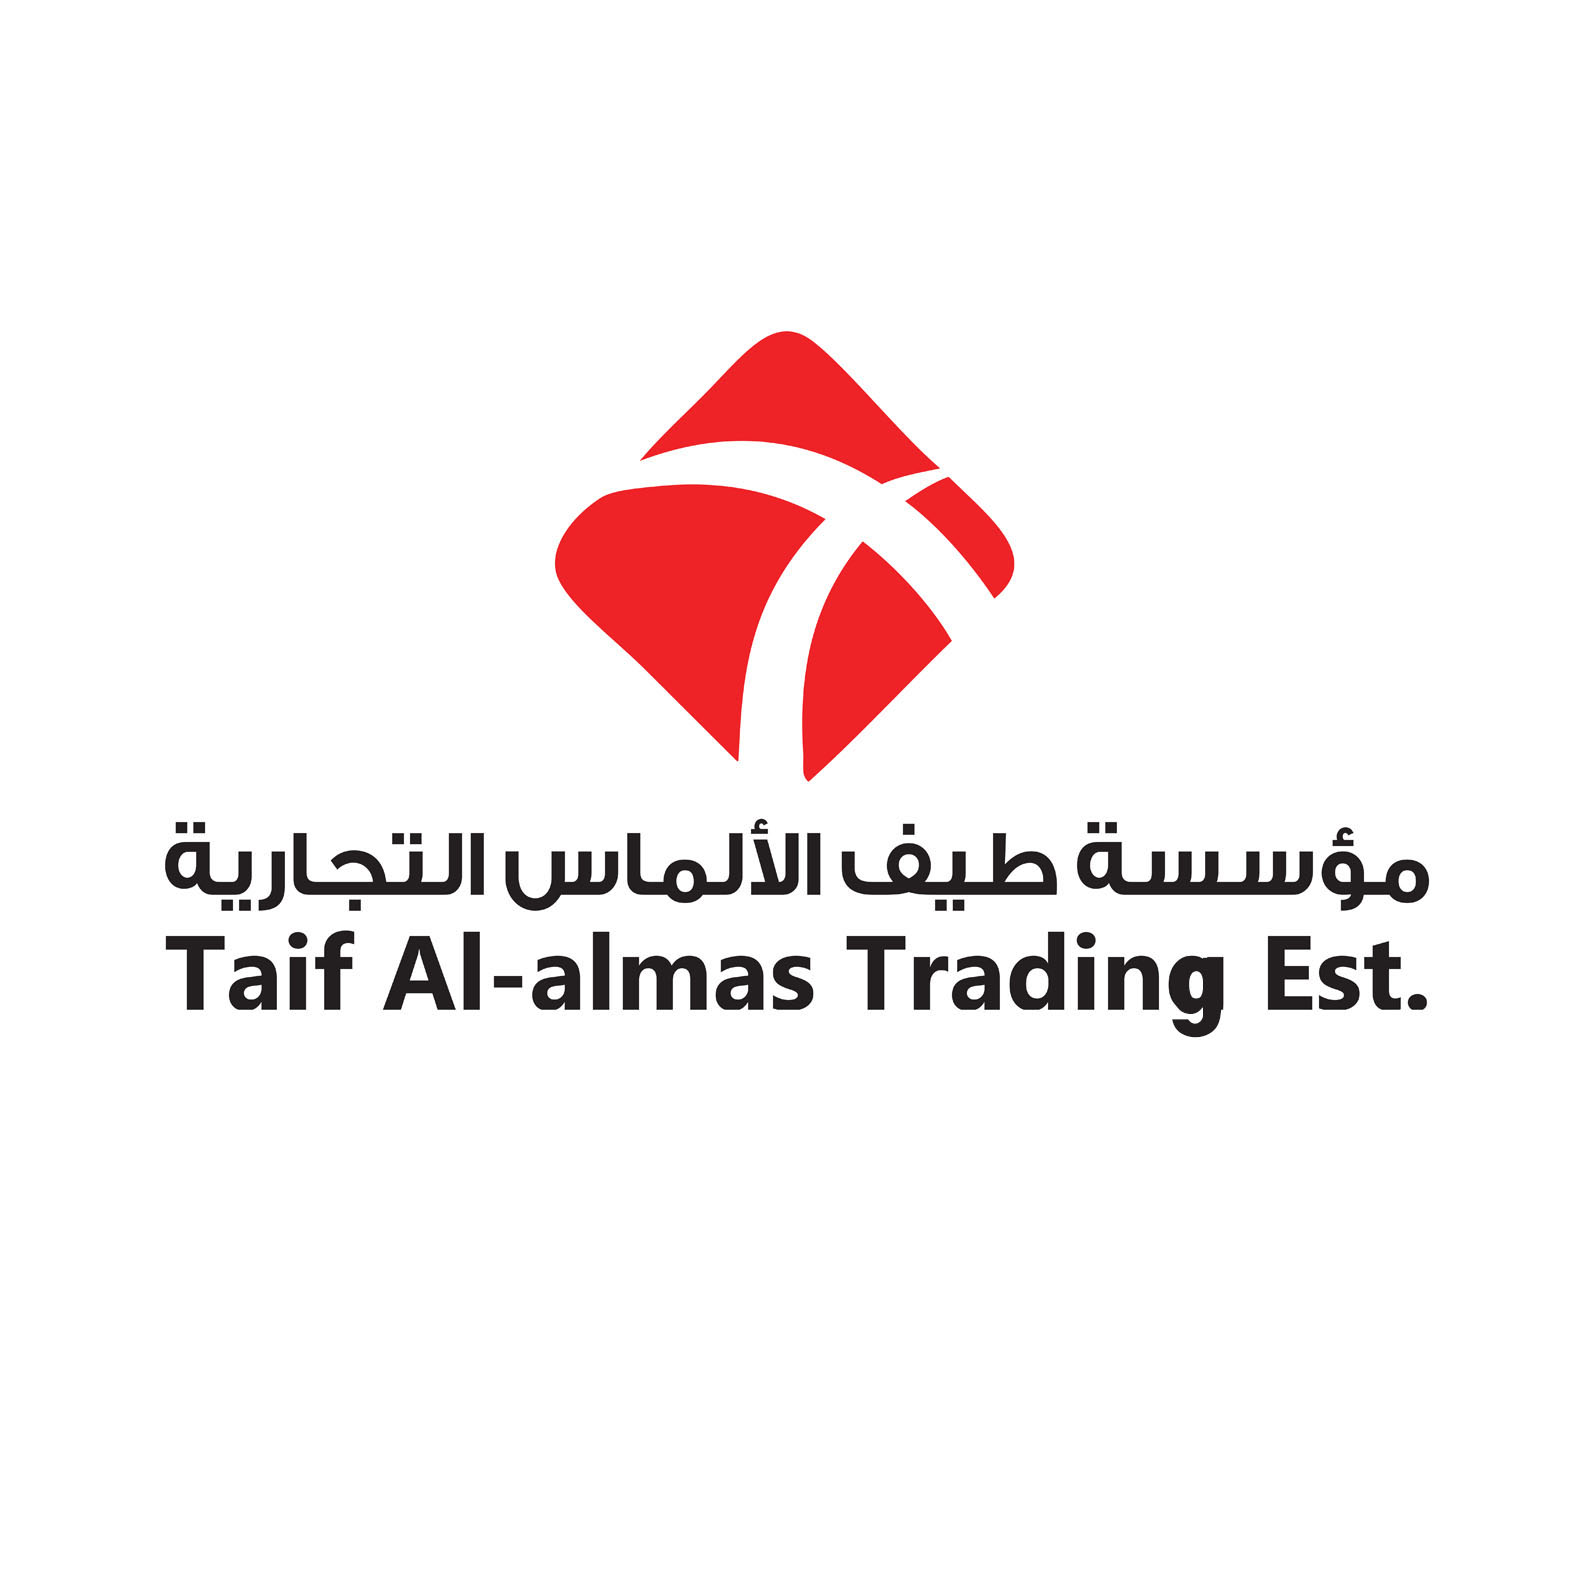 Taif Alalmas Trading Est.